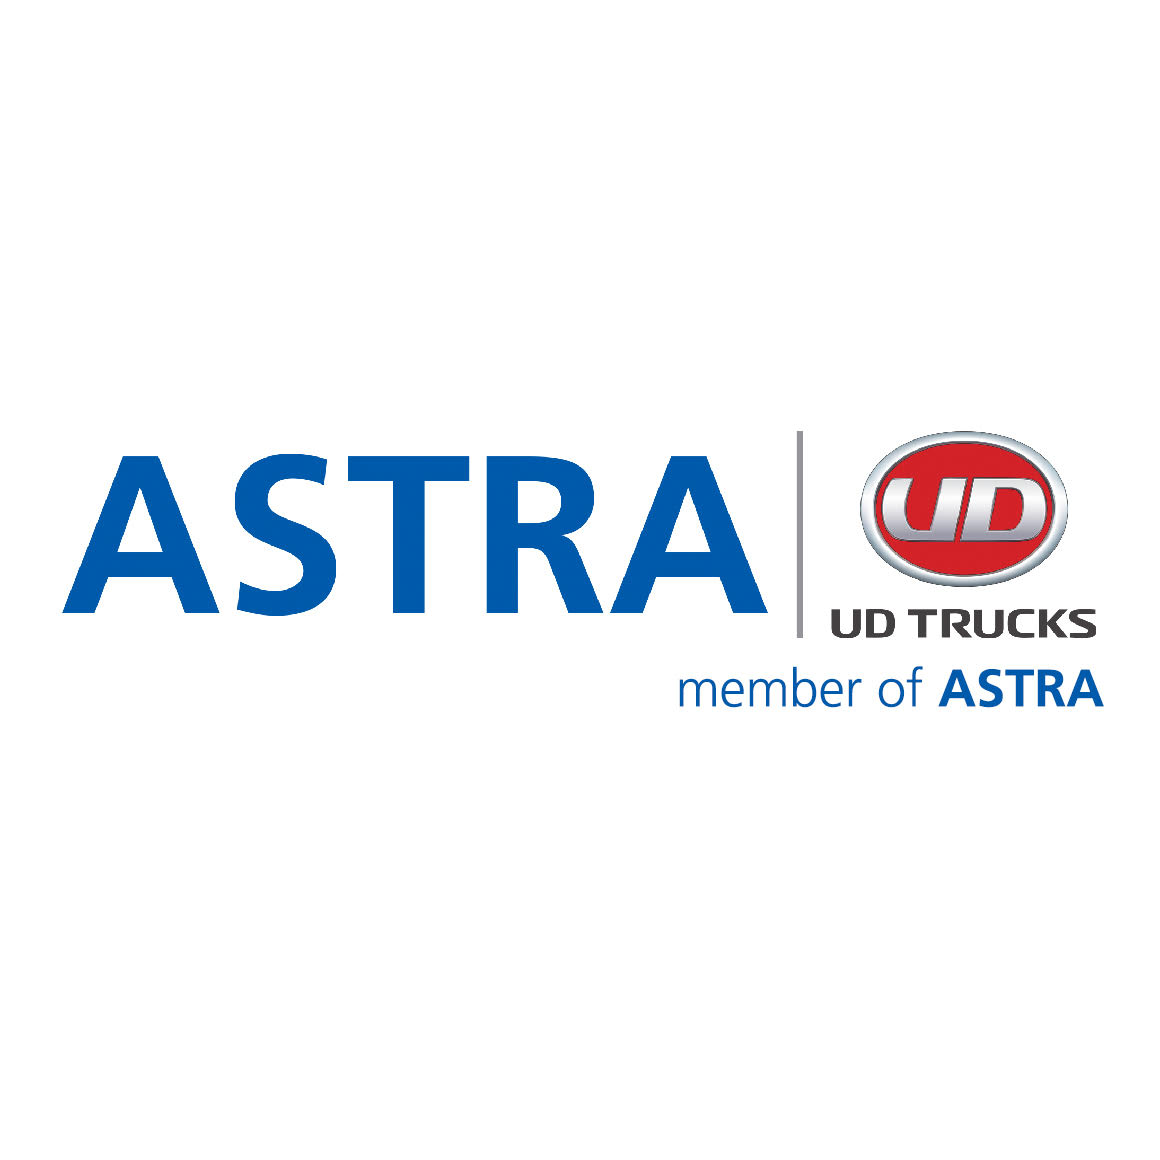 Astra UD Trucks